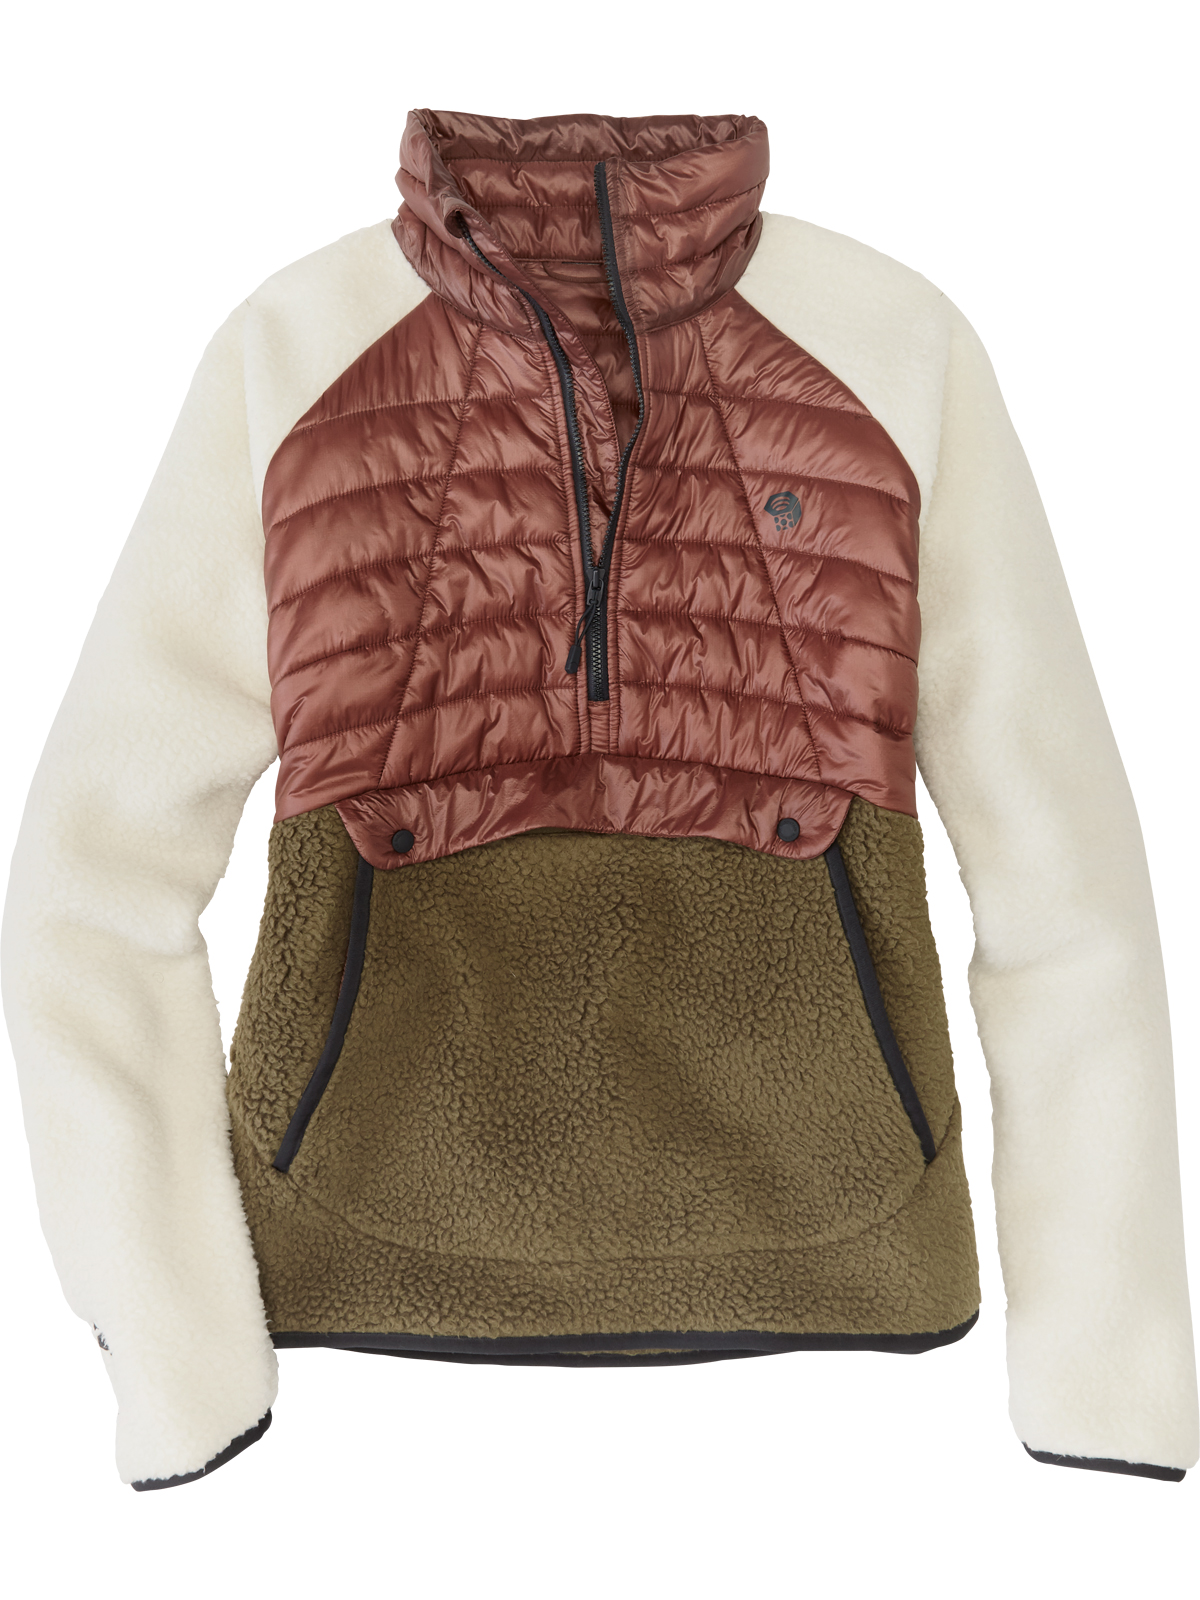 Fleece Pullover: Yeti Hybrid by Mountain Hardwear